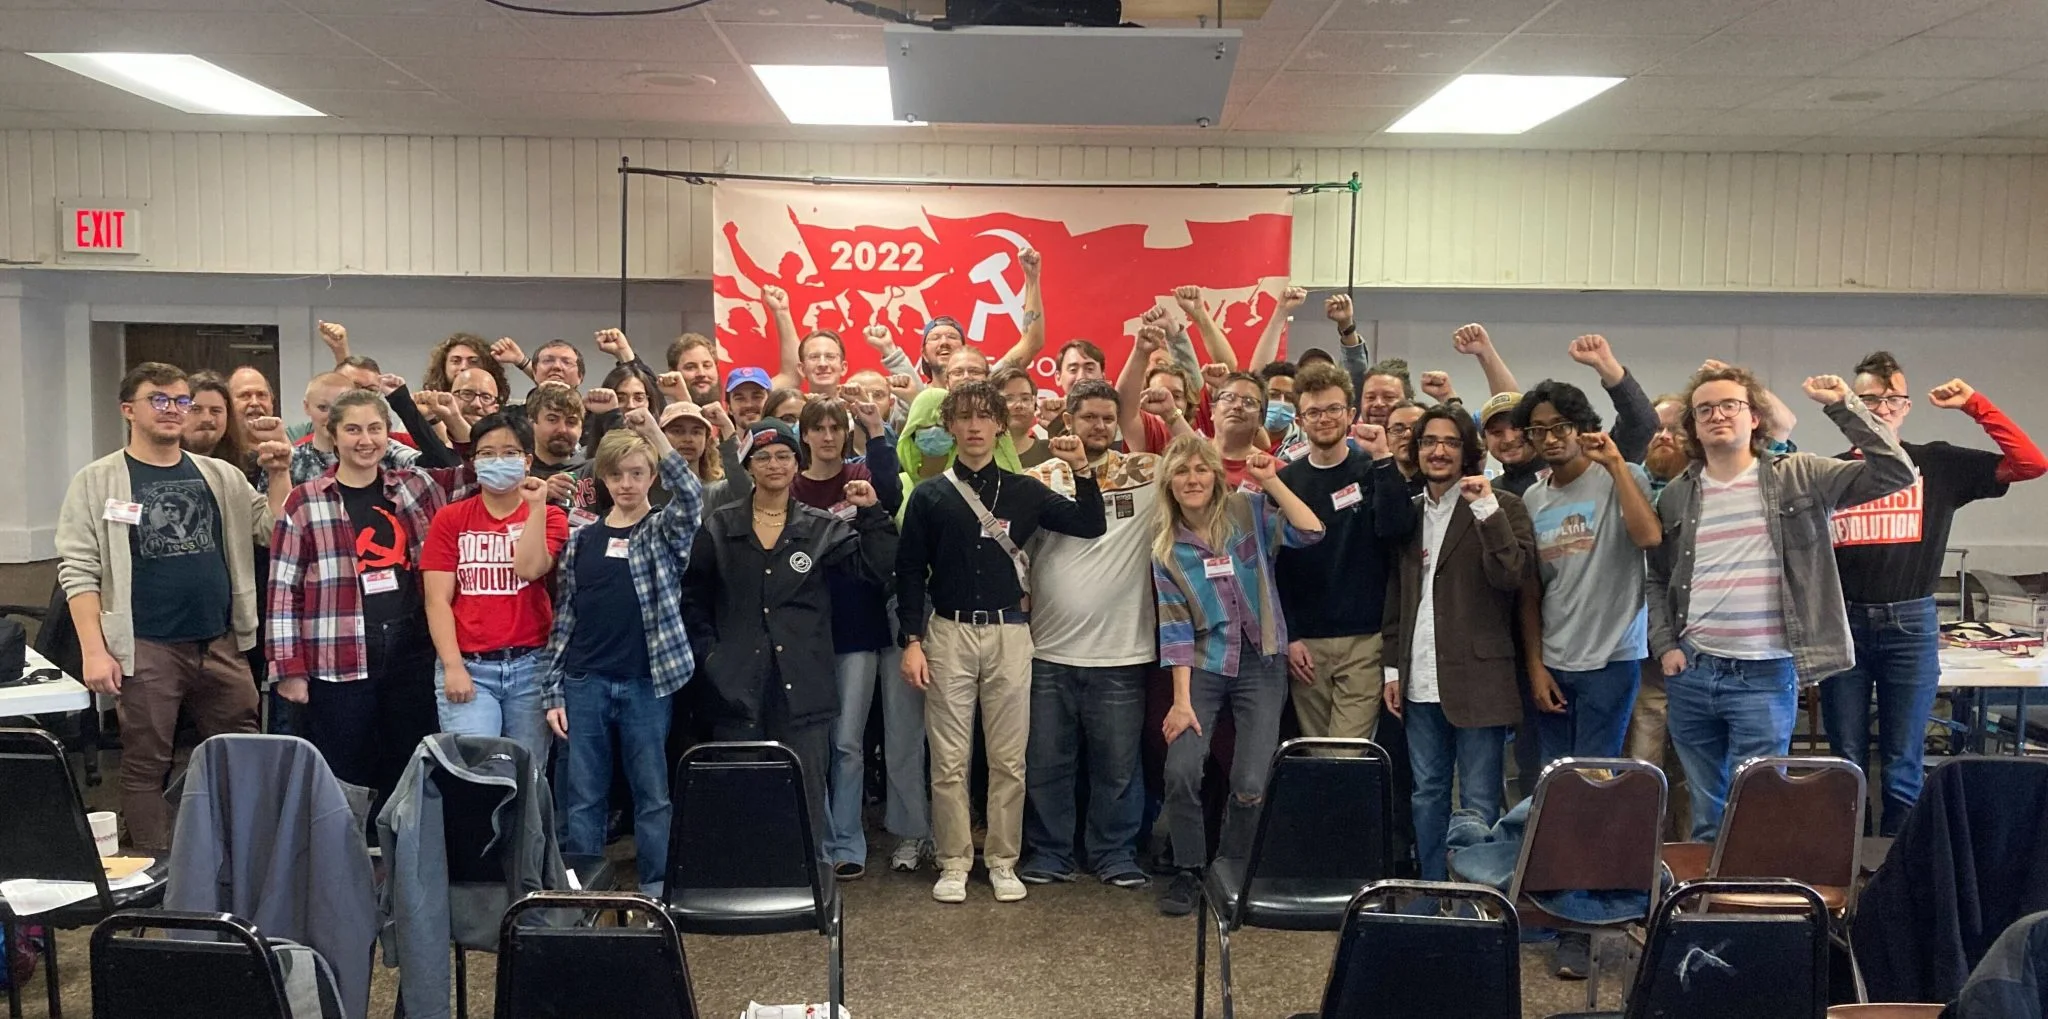 Minneapolis marxist school Image Socialist Revolution